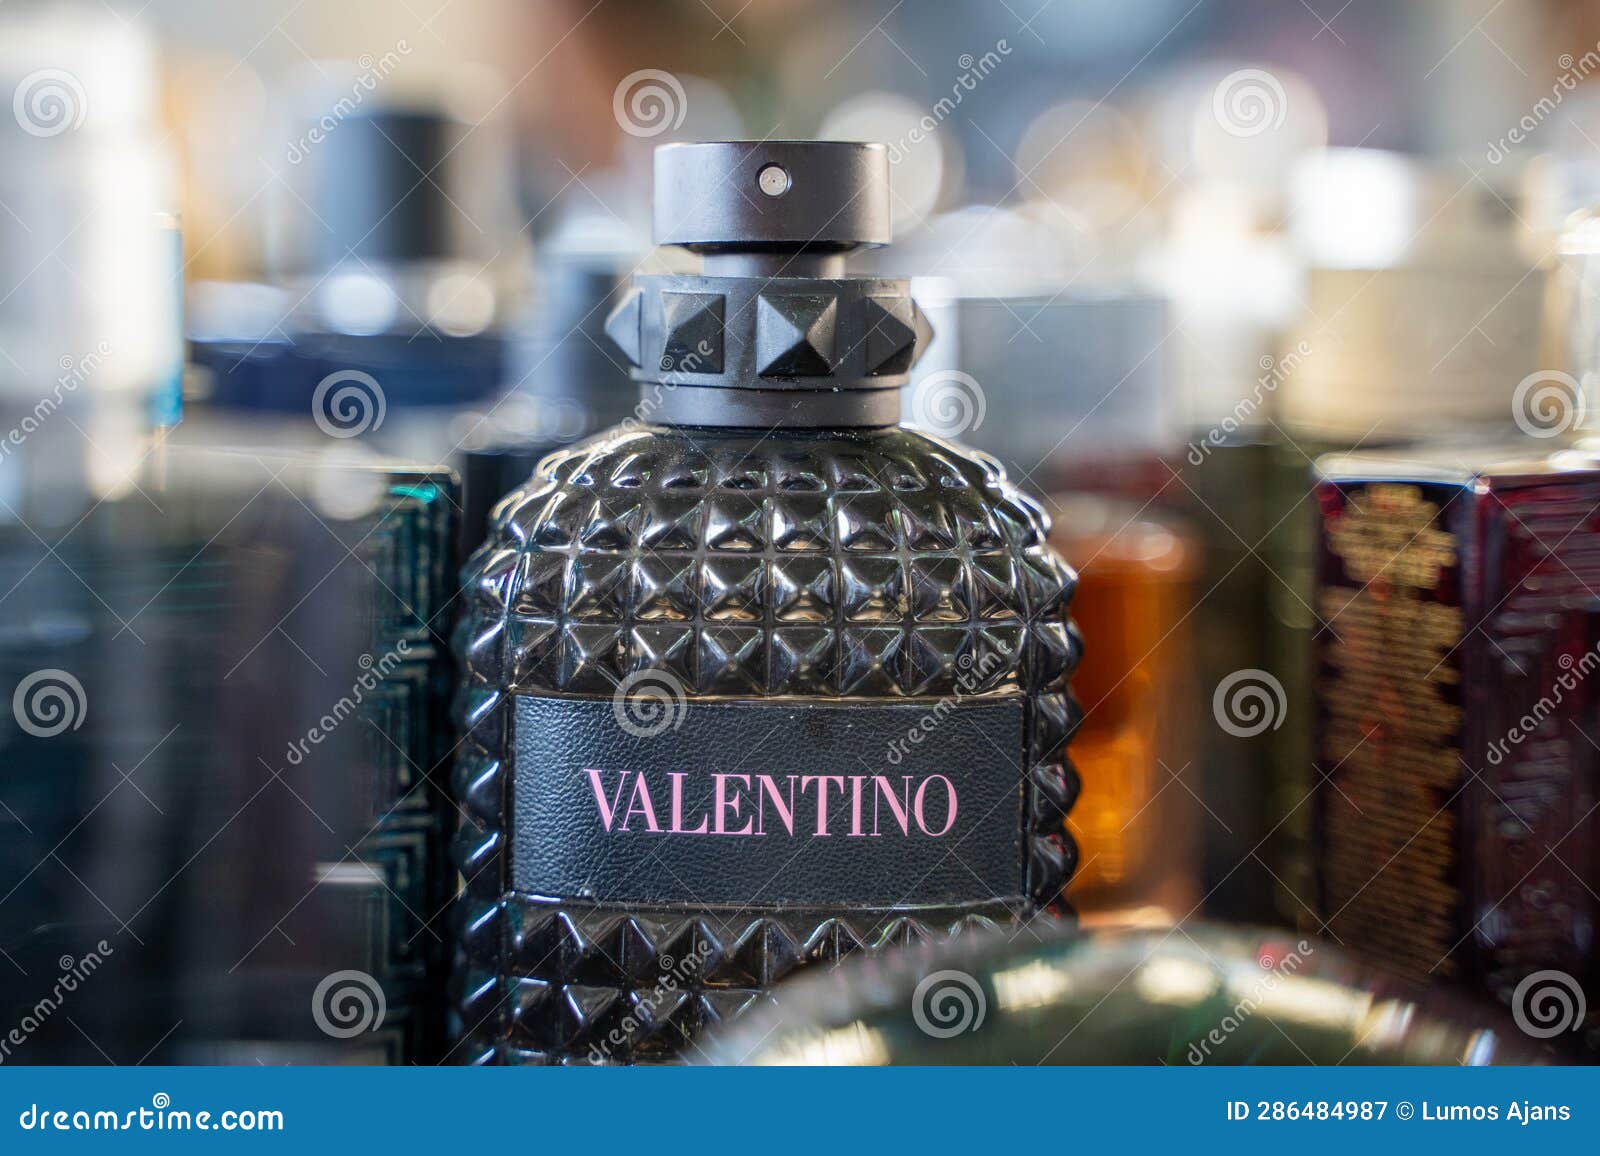 Valentino Perfume Bottle at the Flea Market. Editorial Photography ...